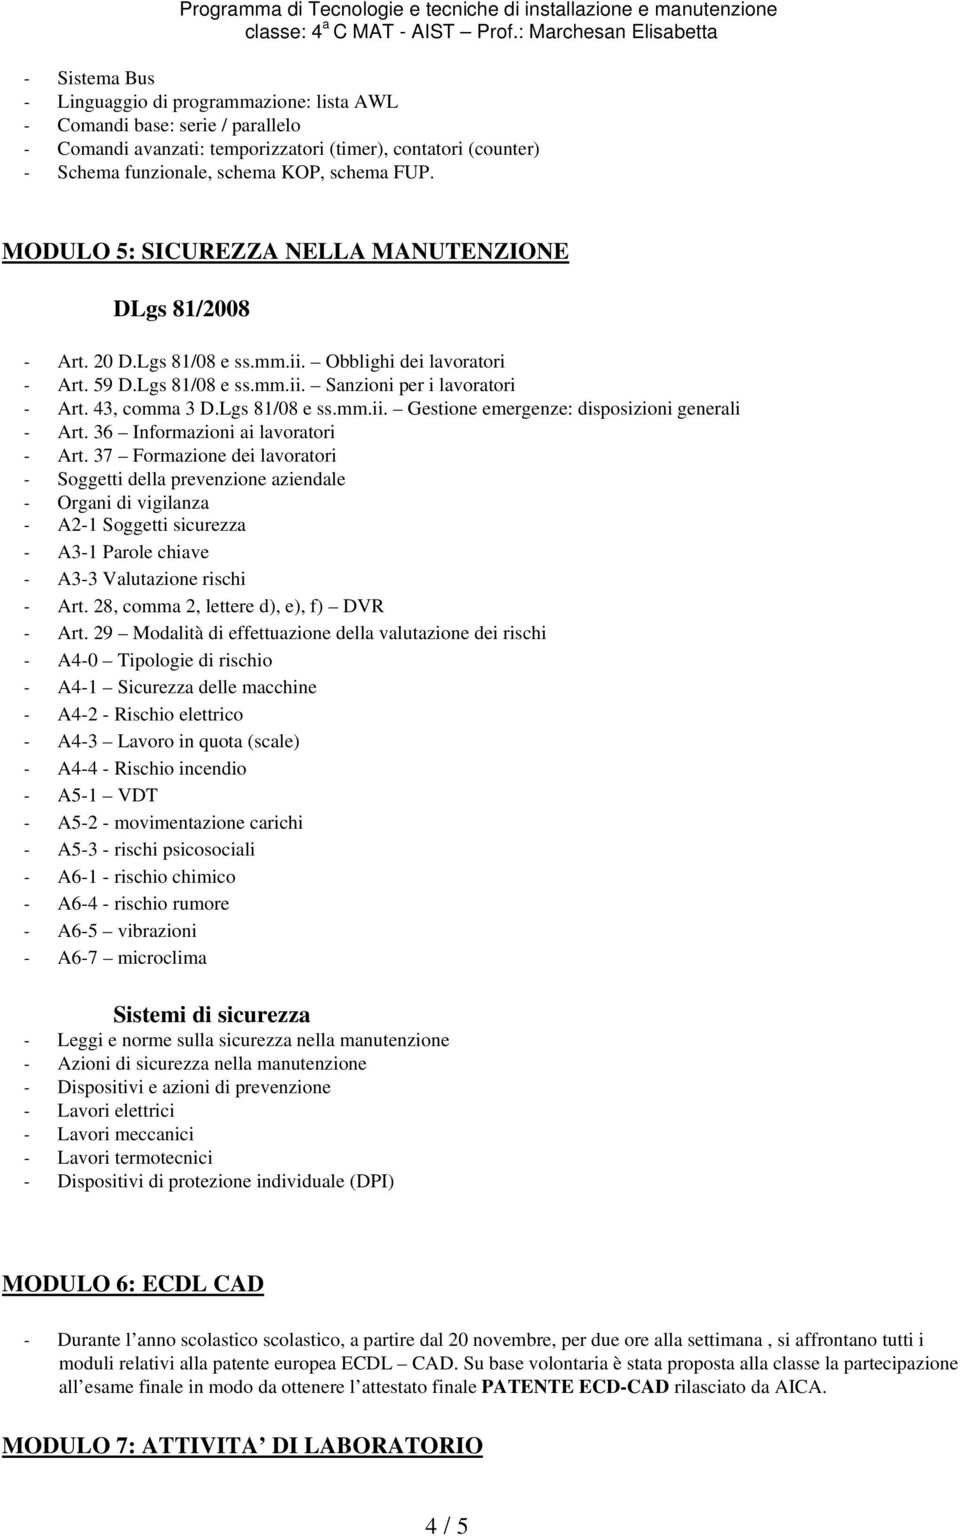 Lgs 81/08 e ss.mm.ii. Gestione emergenze: disposizioni generali - Art. 36 Informazioni ai lavoratori - Art.